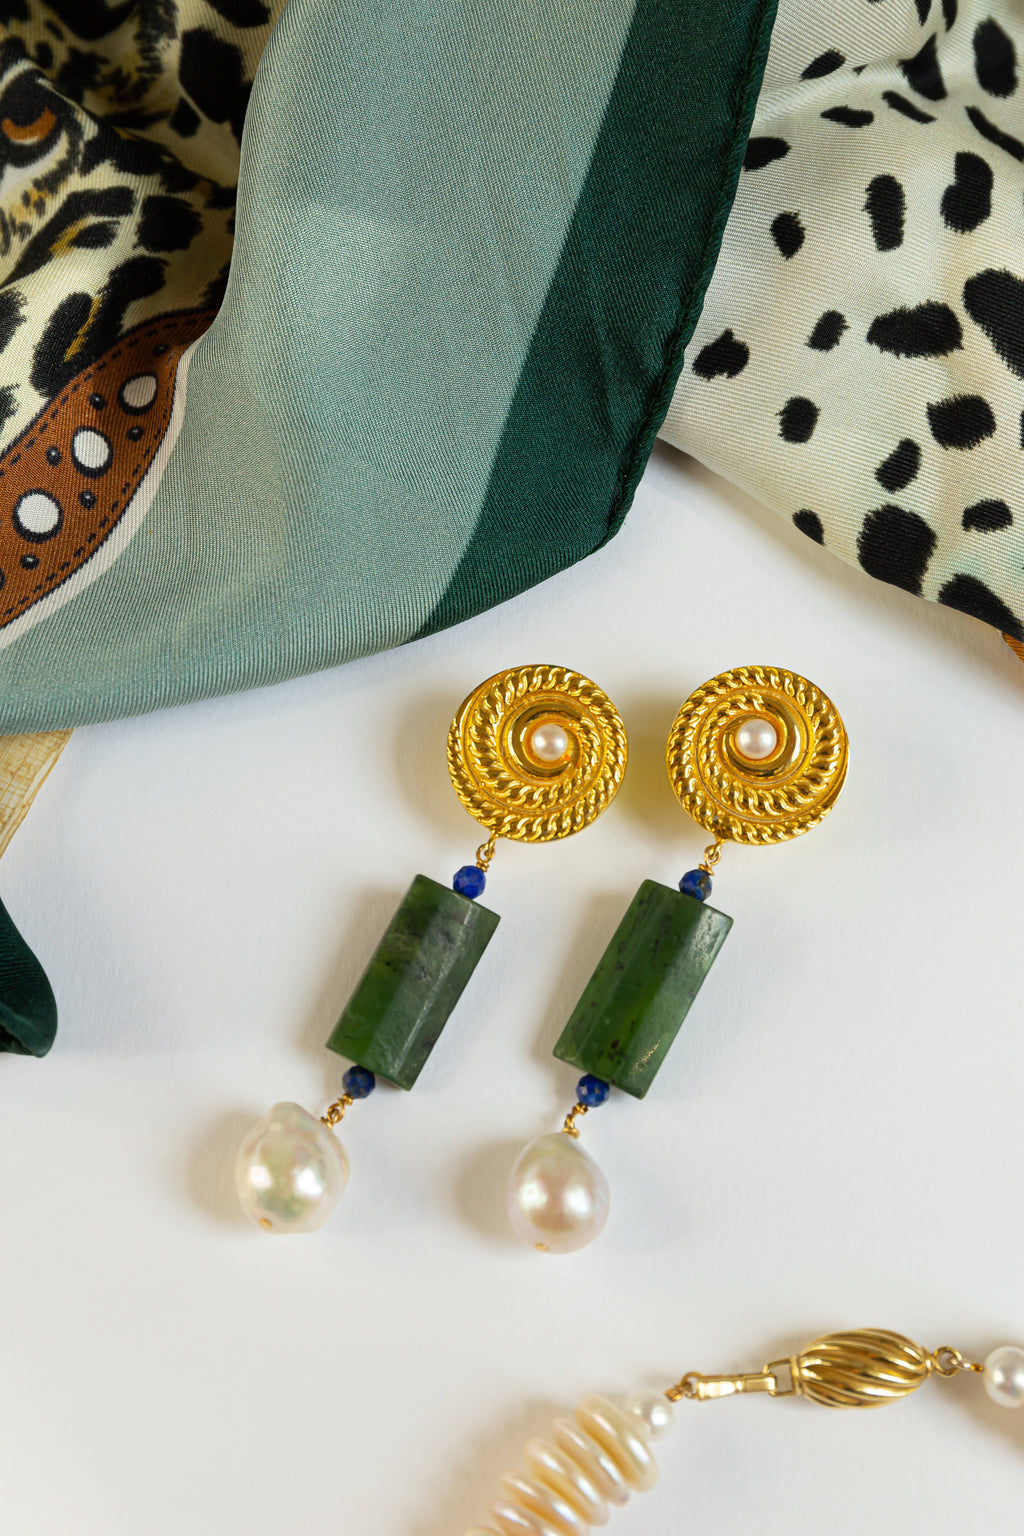 Fashion earrings jade lapis and pearls - Avanguardian Gallery London